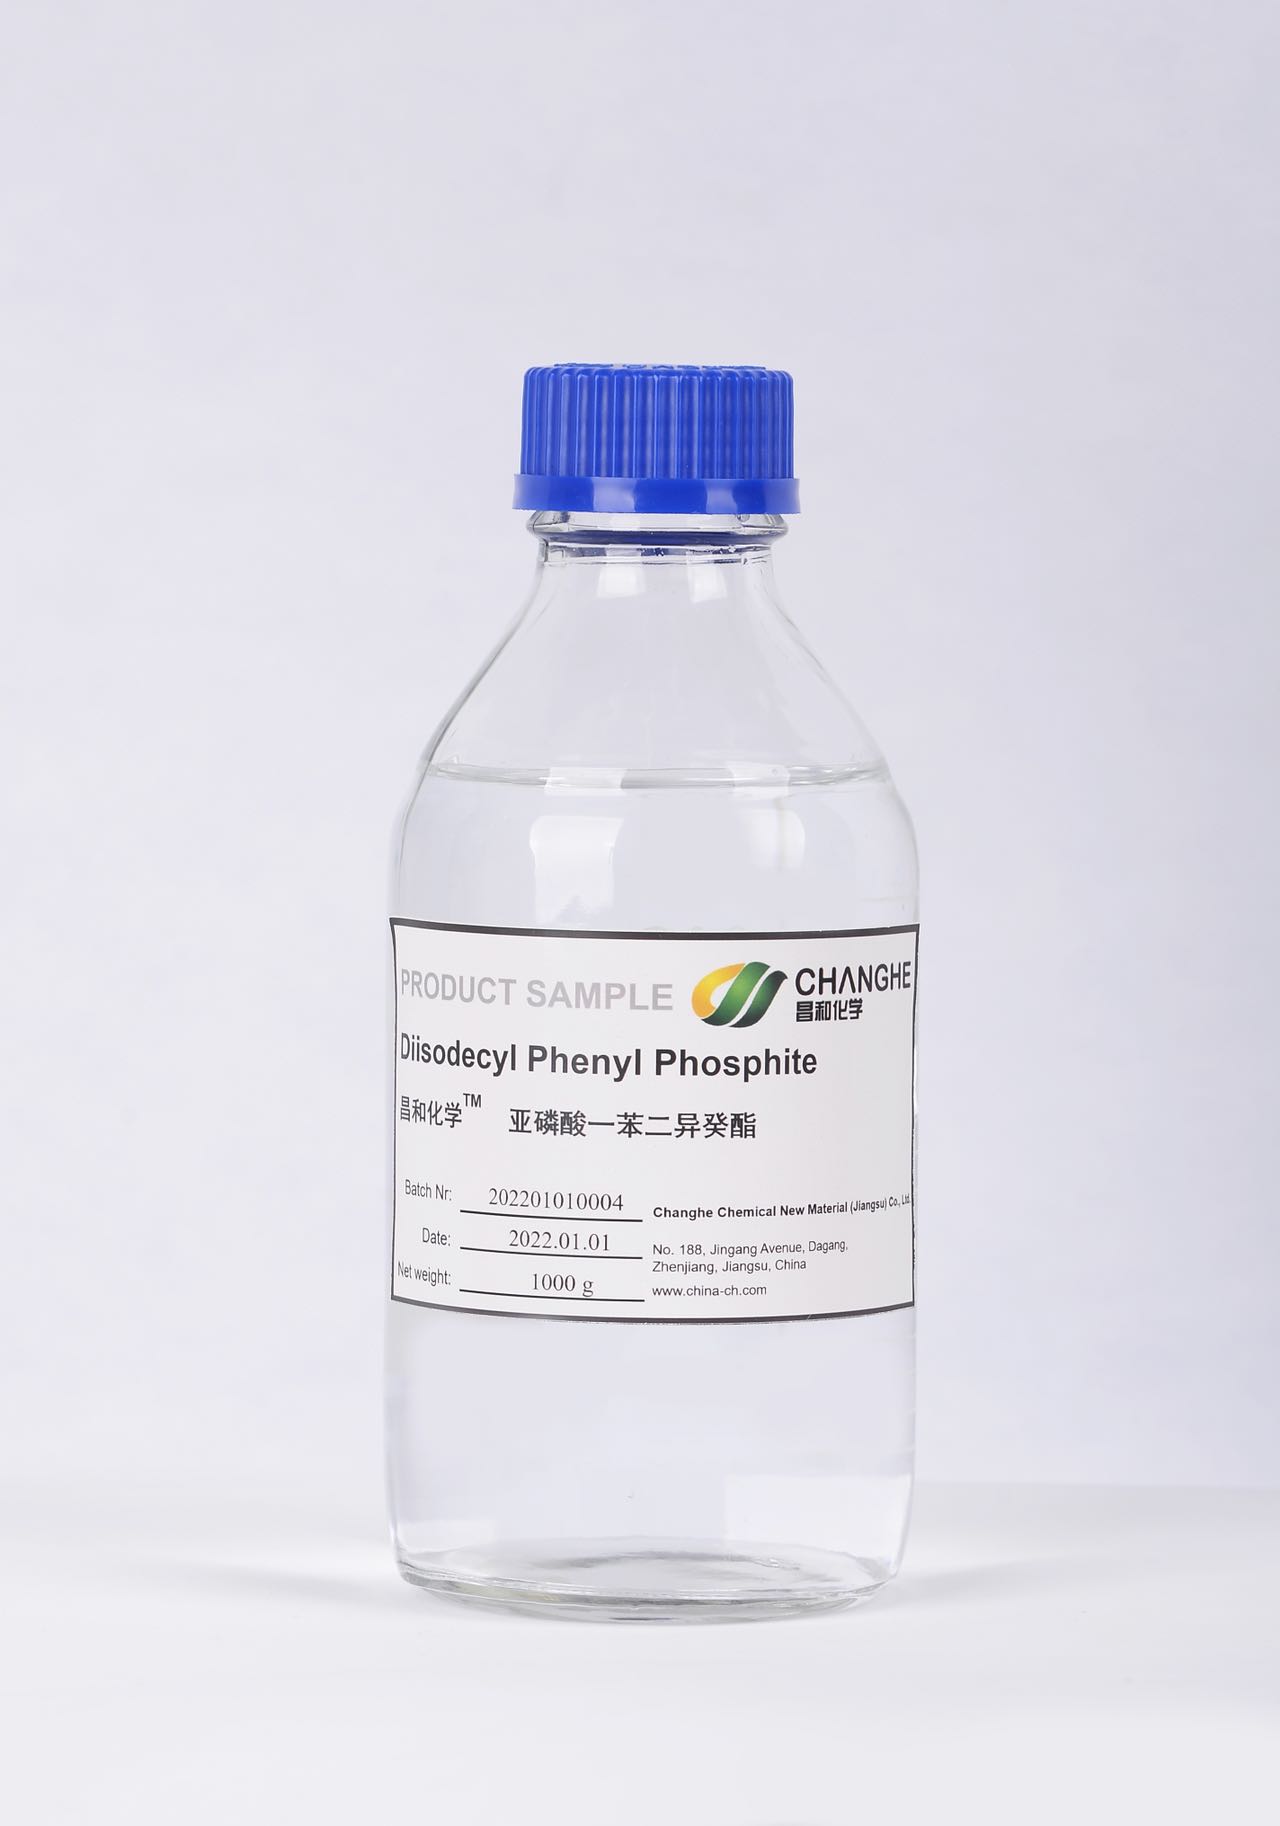 Diisodecyl phenyl phosphite SliderImage